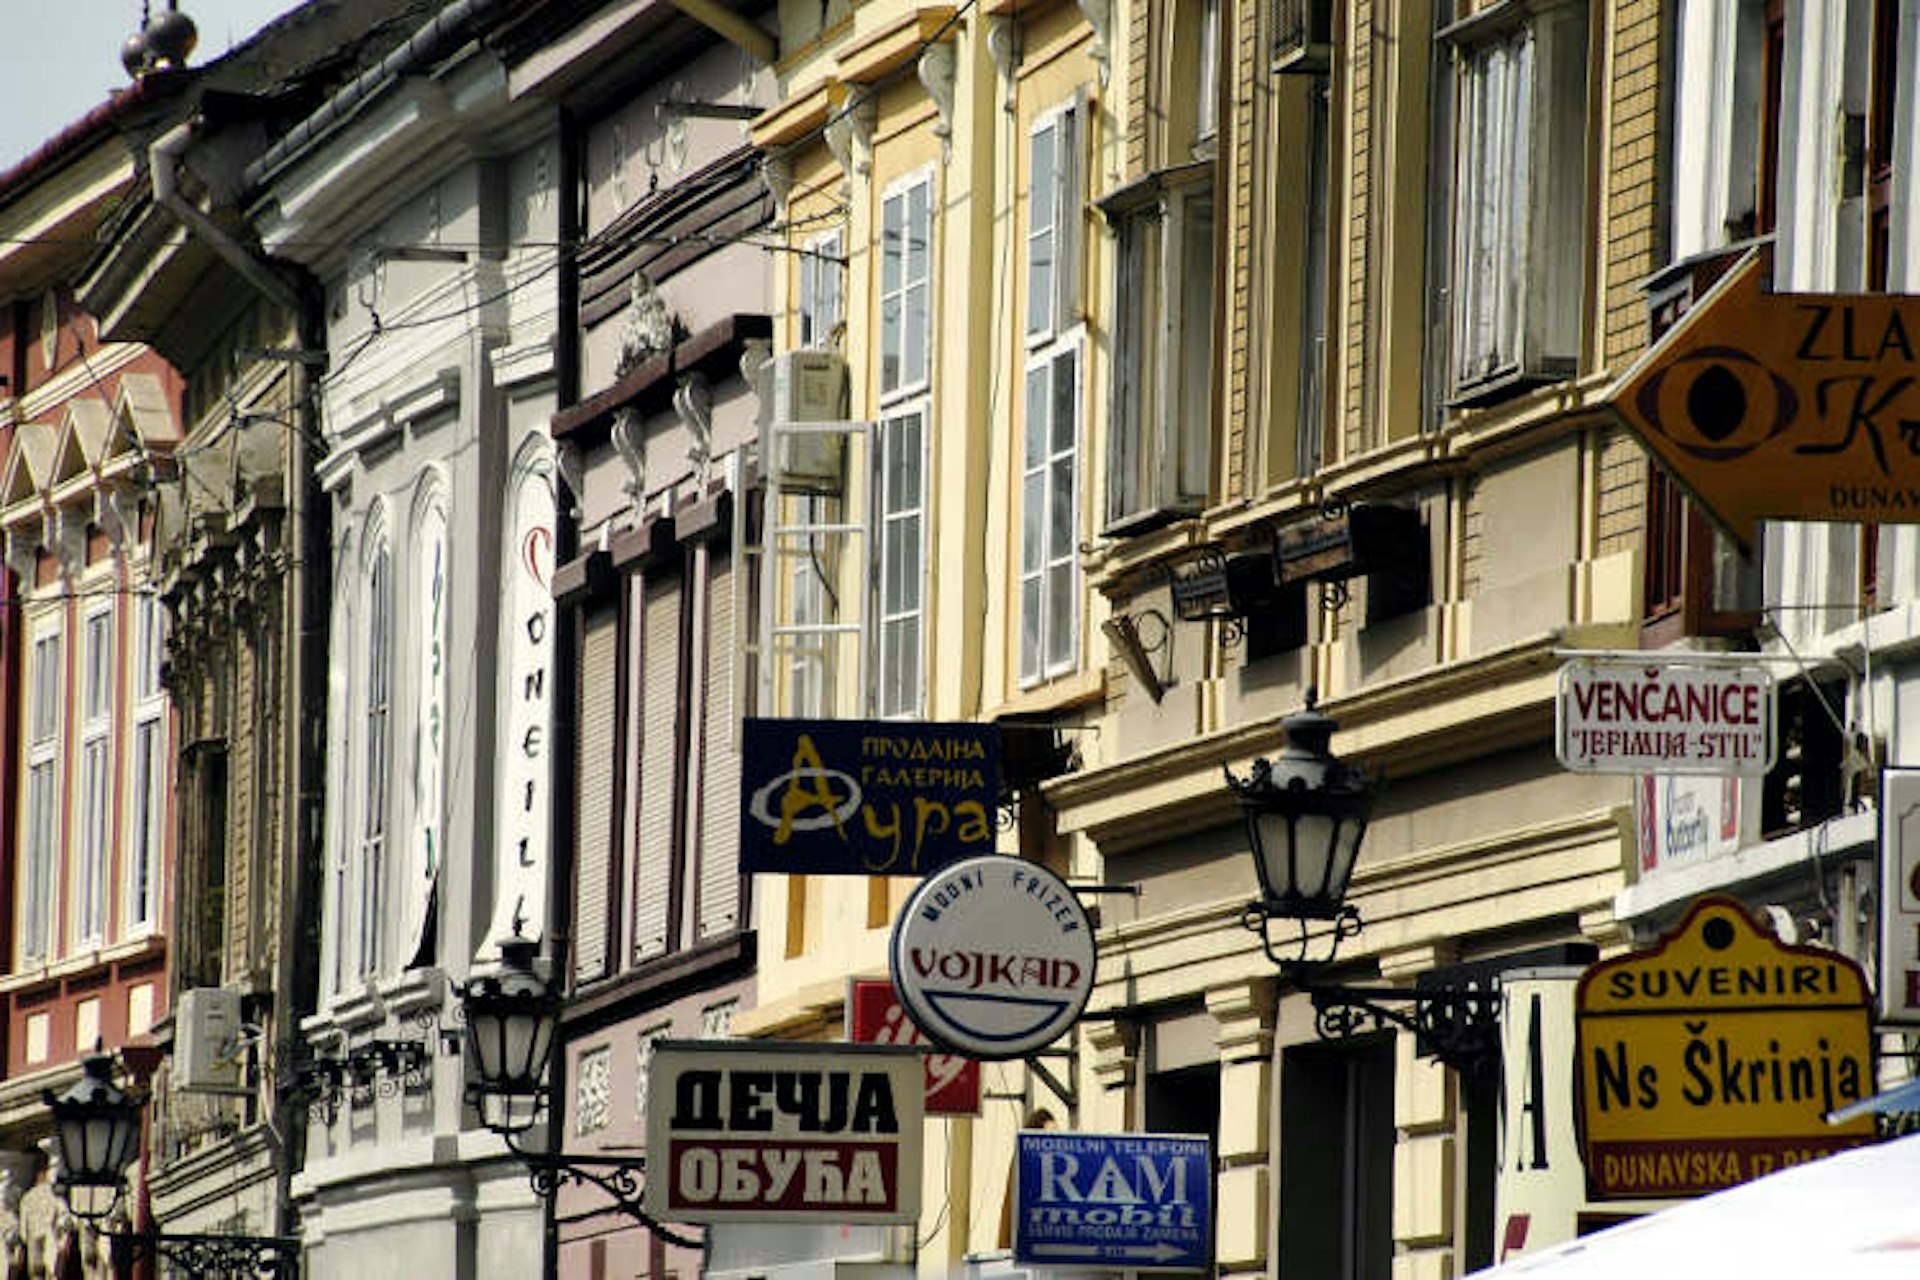 Shop facades along Novi Sad’s Dunavska street © David L Ryan / Lonely Planet Images / Getty Images